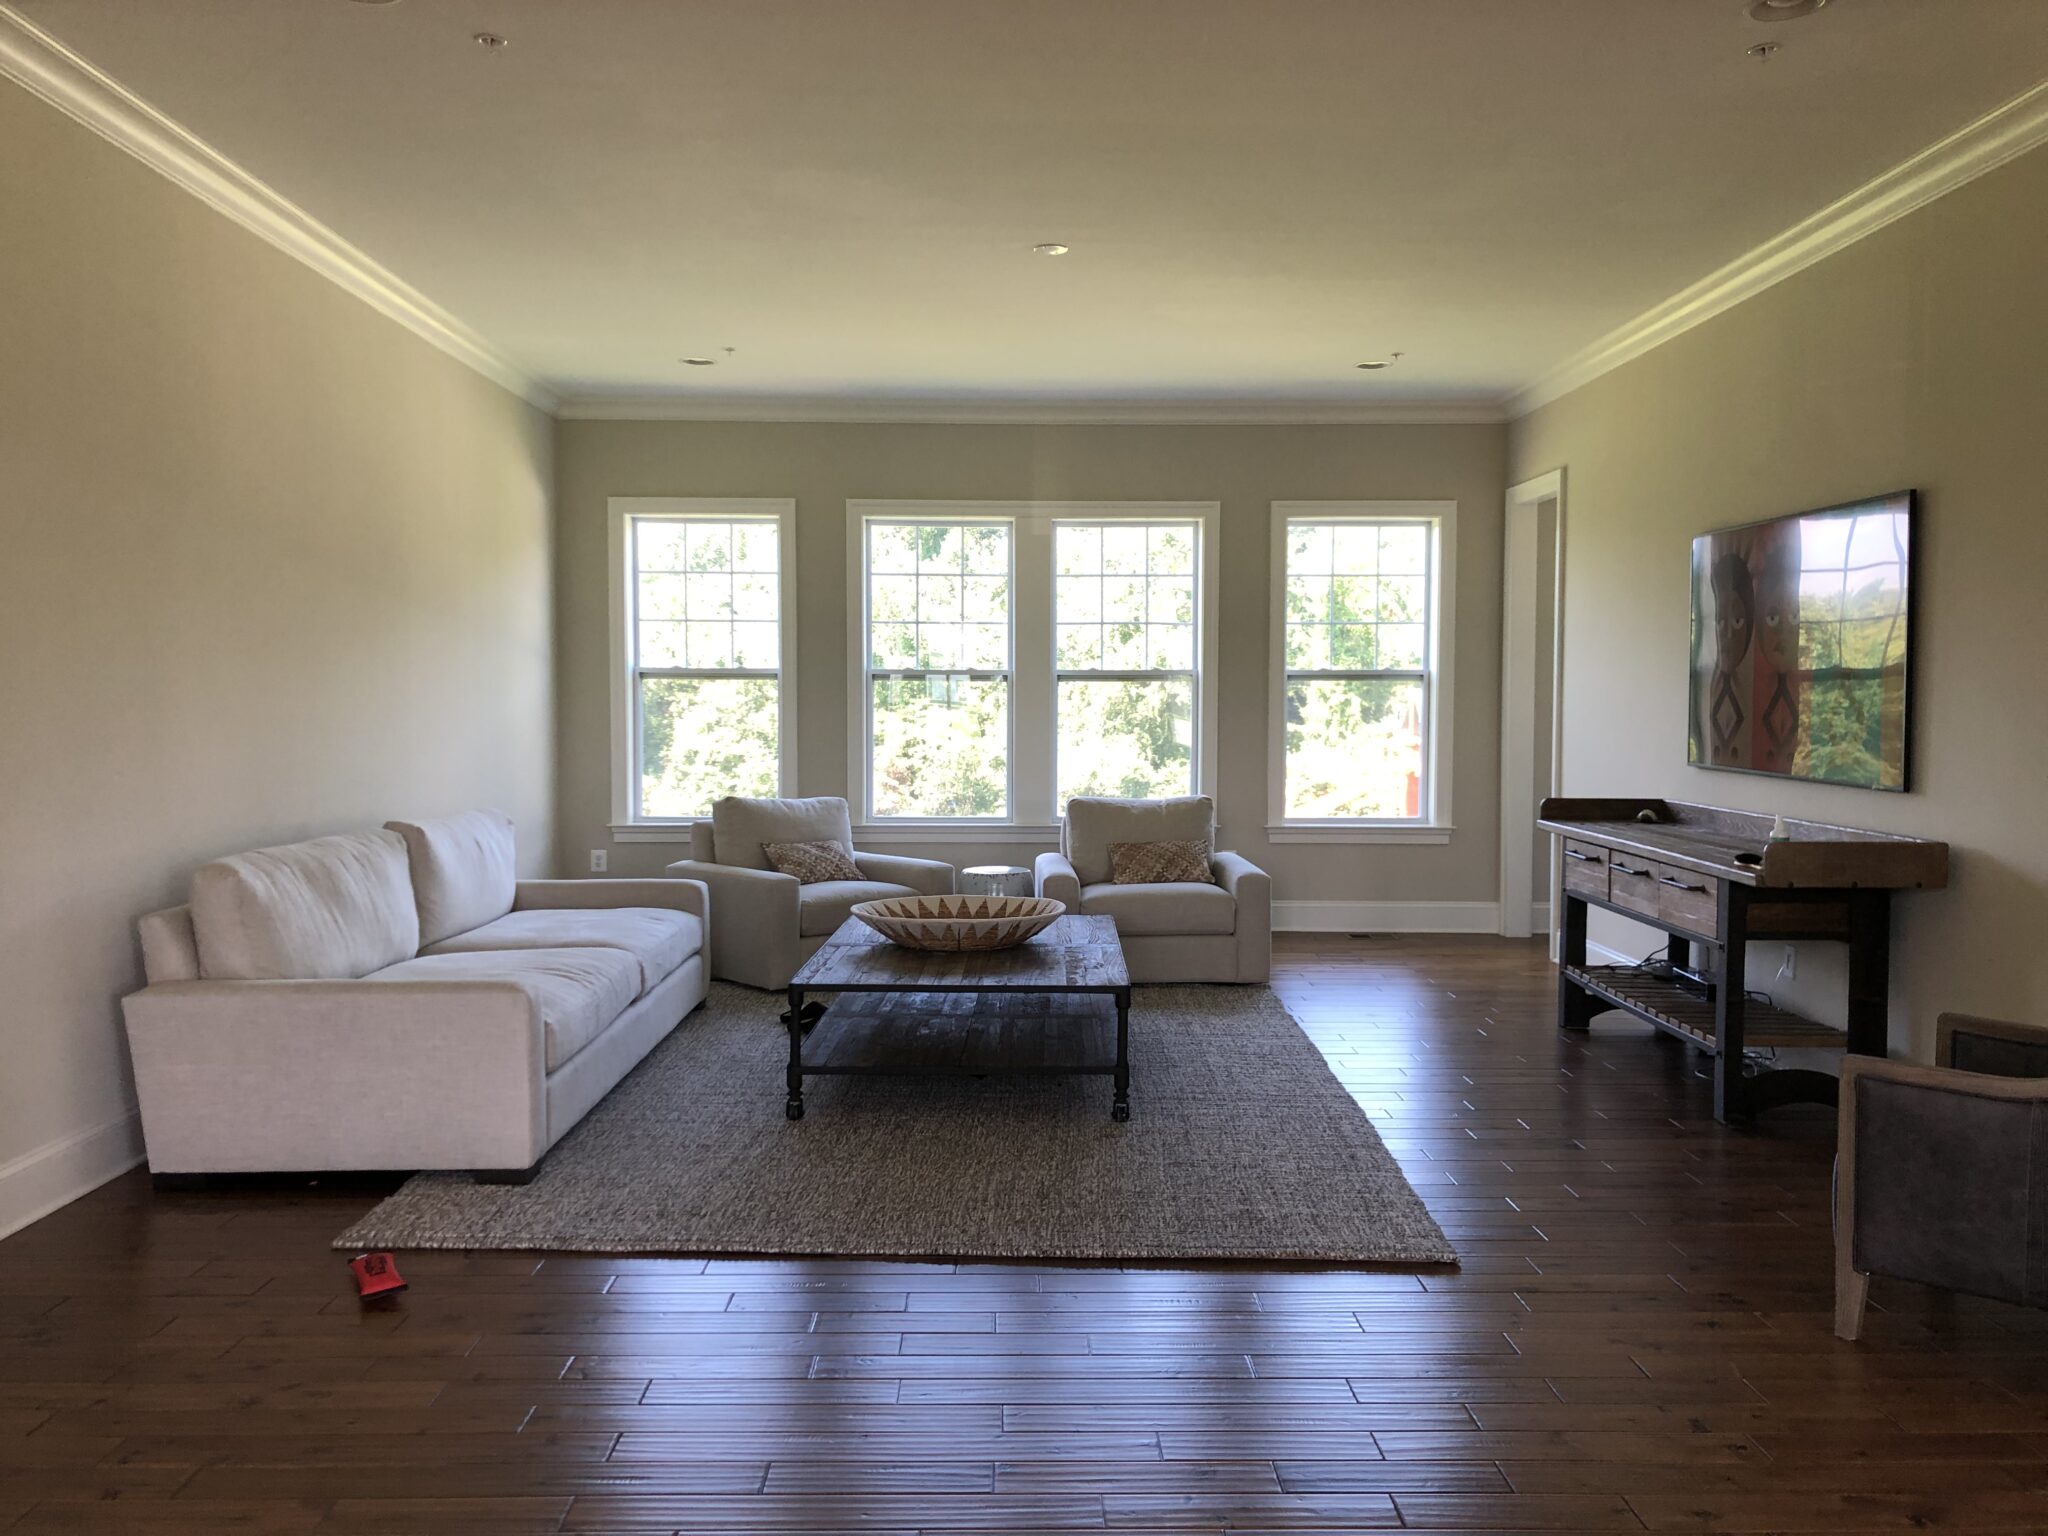 A living room before interior design services